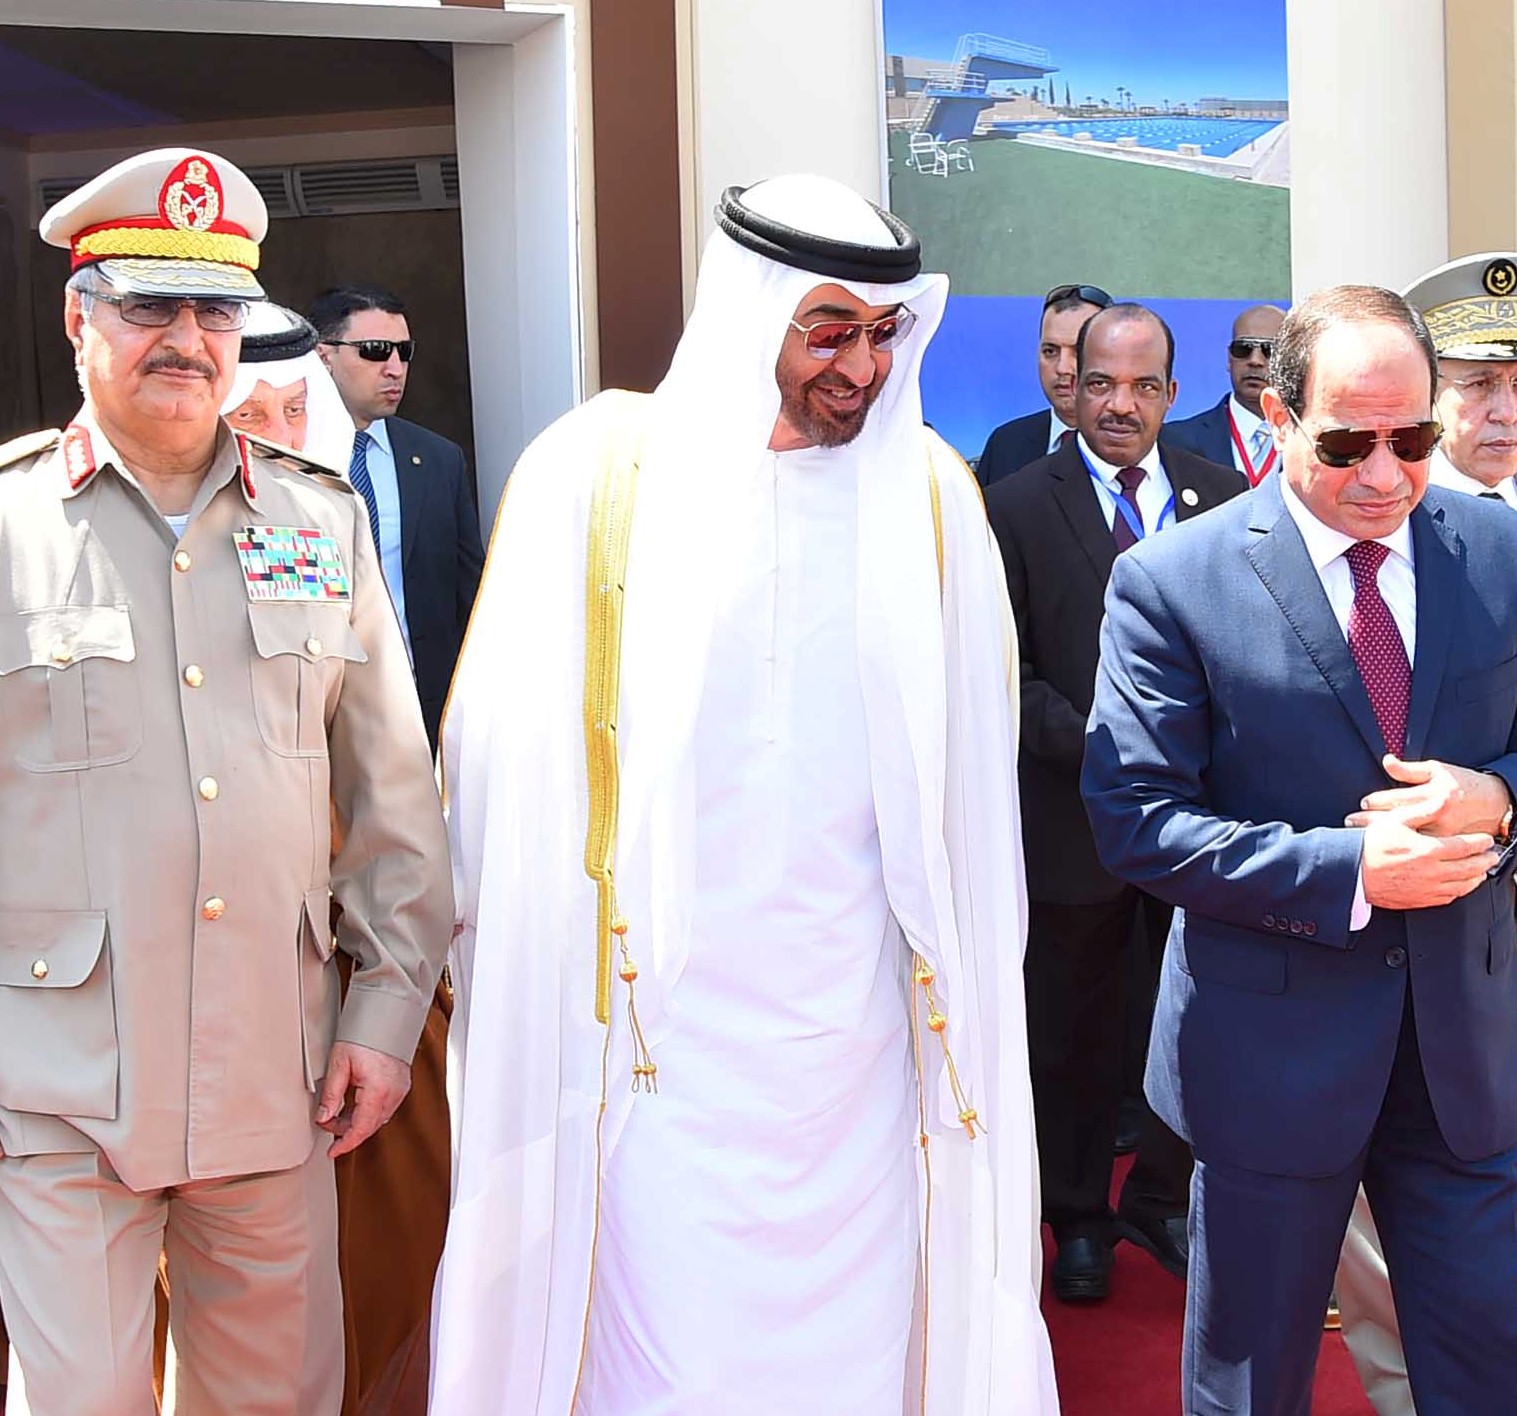 Egyptian President Abdel Fattah al-Sisi (R) arrives with Arab leaders Sheikh Mohammed bin Zayed (C), Crown Prince of Abu Dhabi, and General Khalifa Haftar